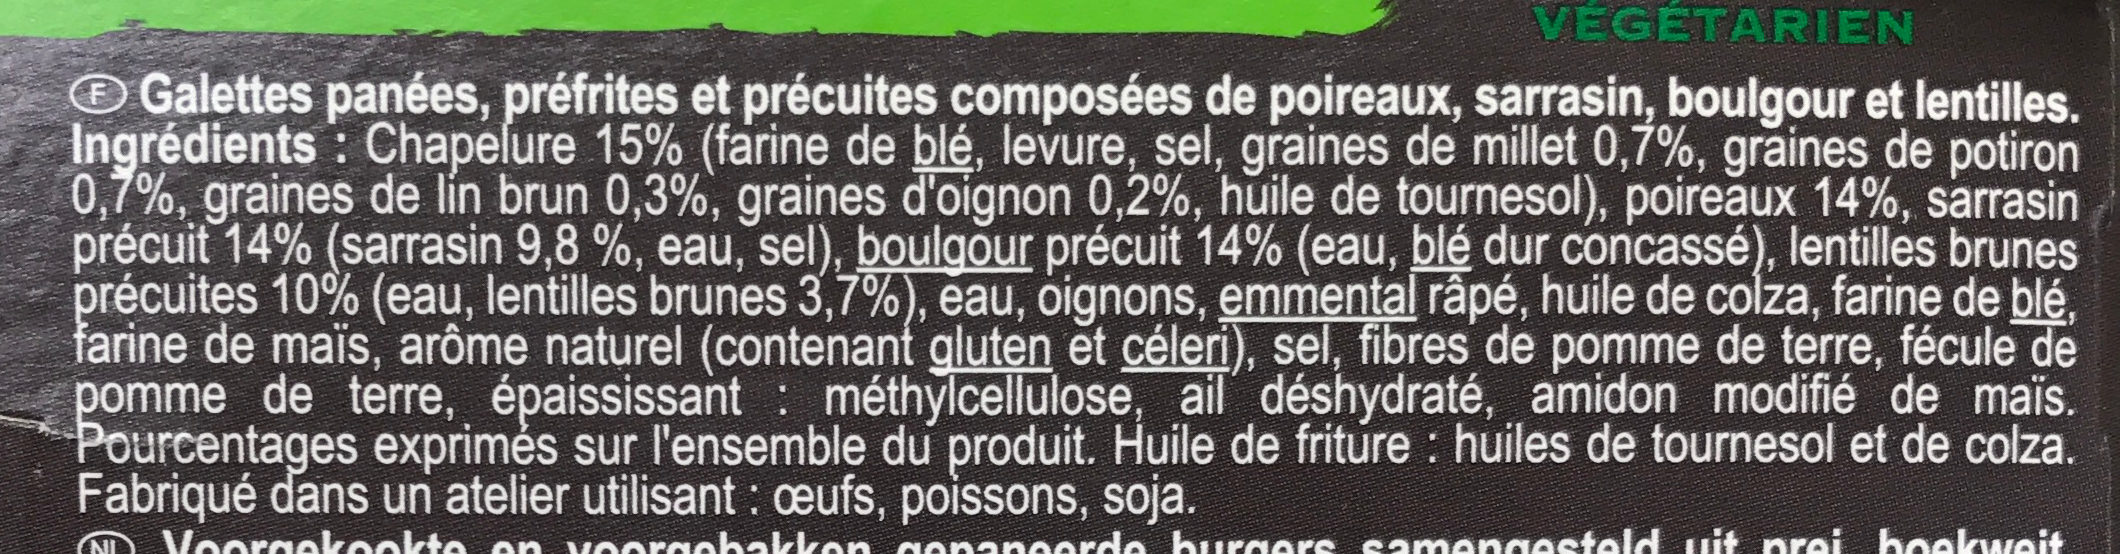 Galettes panées - Ingredientes - fr